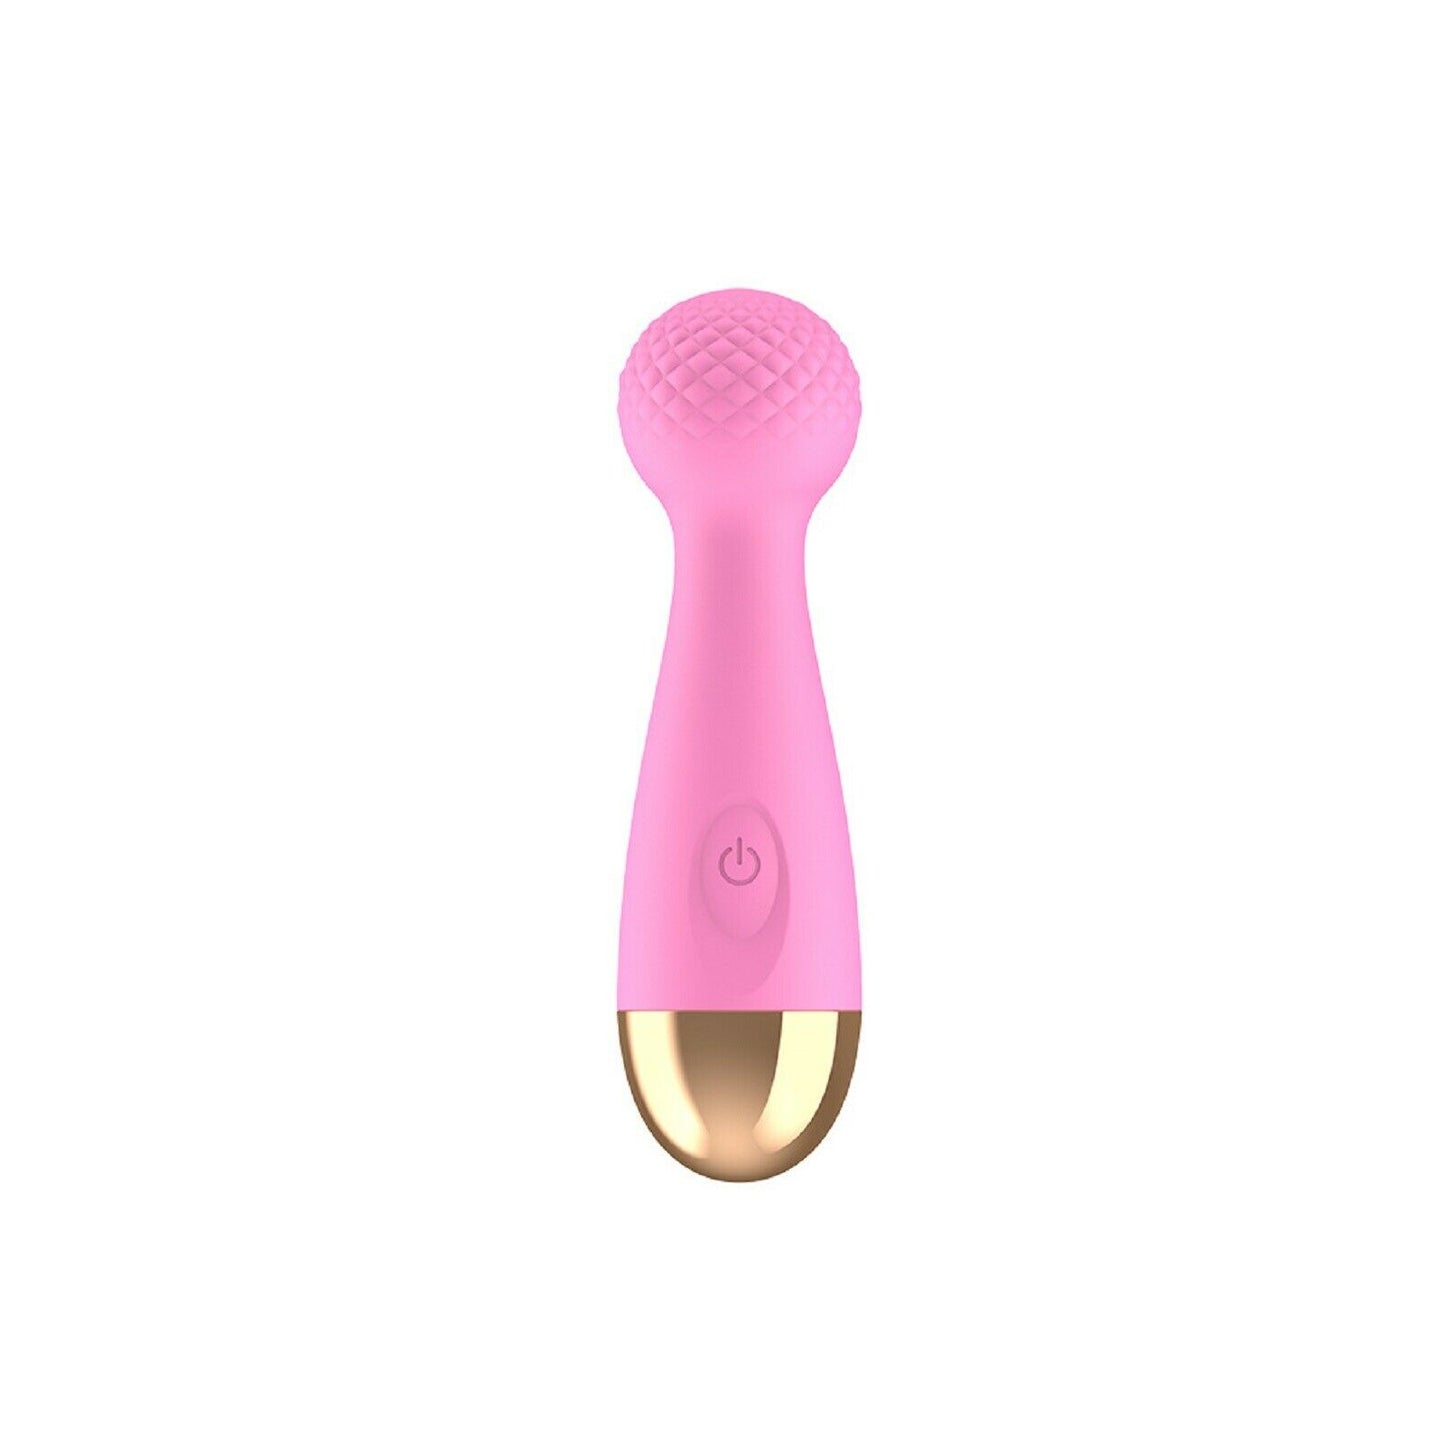 G-Spot Vibrator Mini Wand Dildo Clitoral Stimulator Clit Massager AV USB Sex Toy